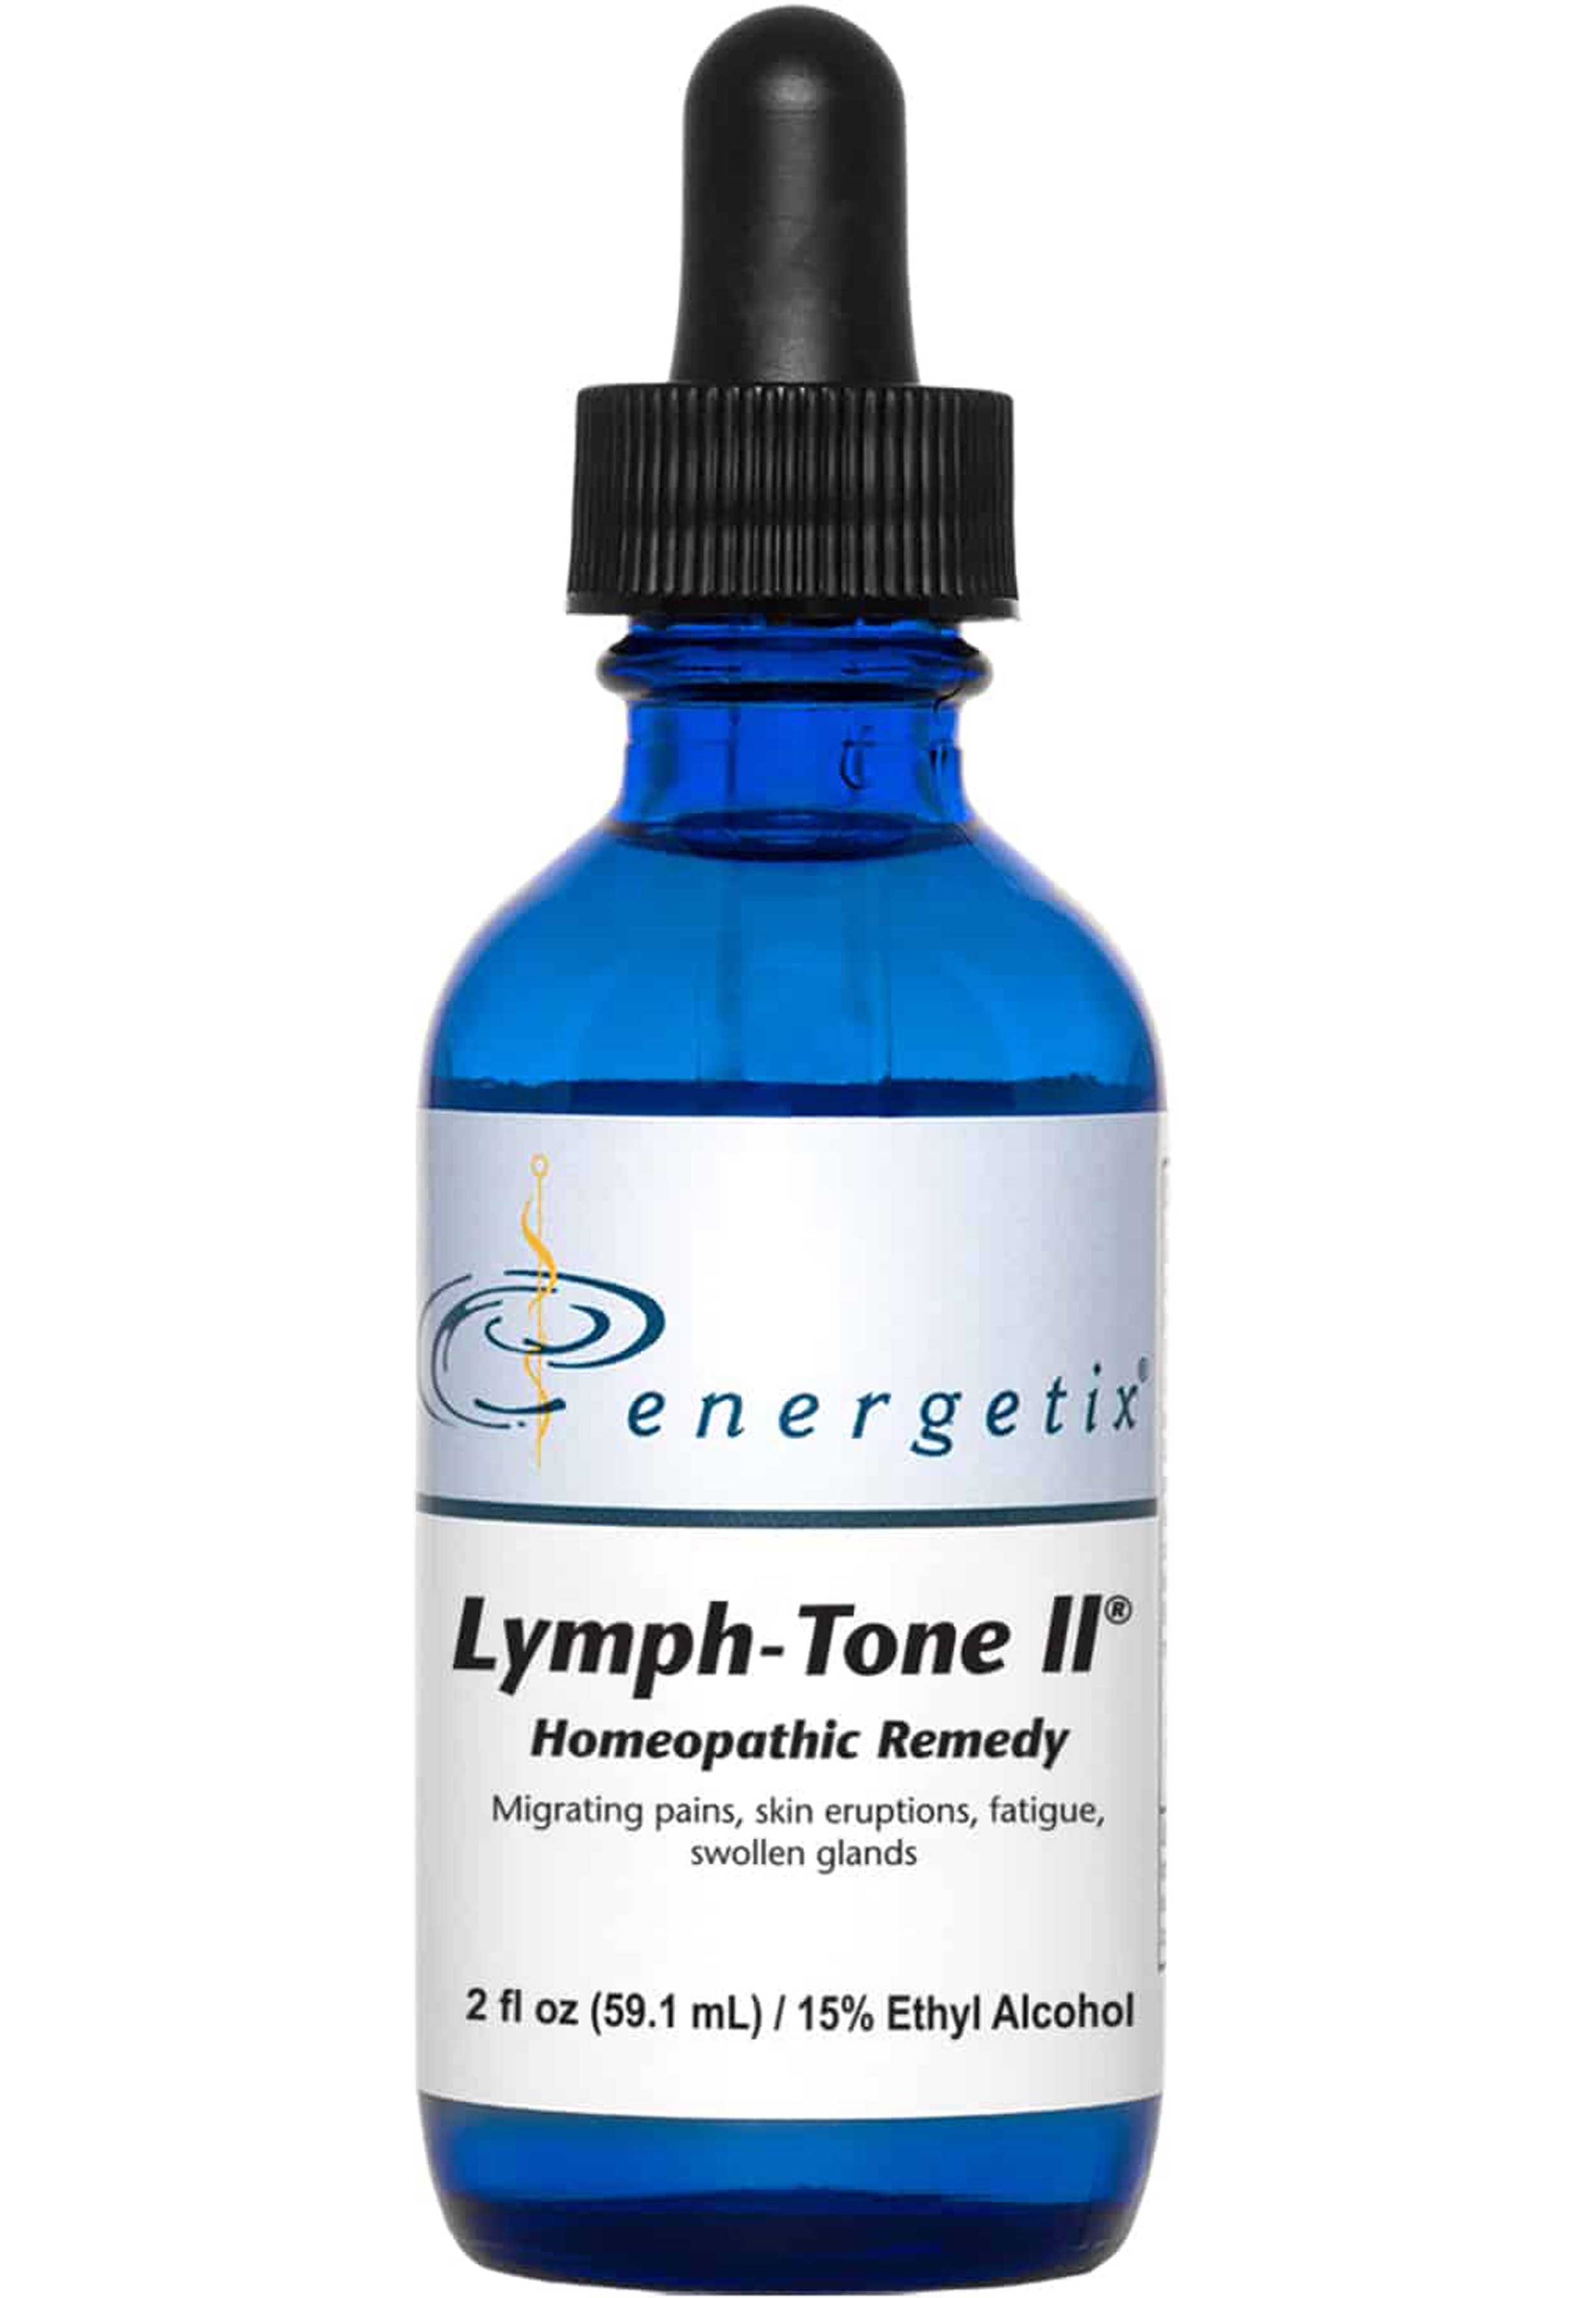 Energetix Lymph-Tone II